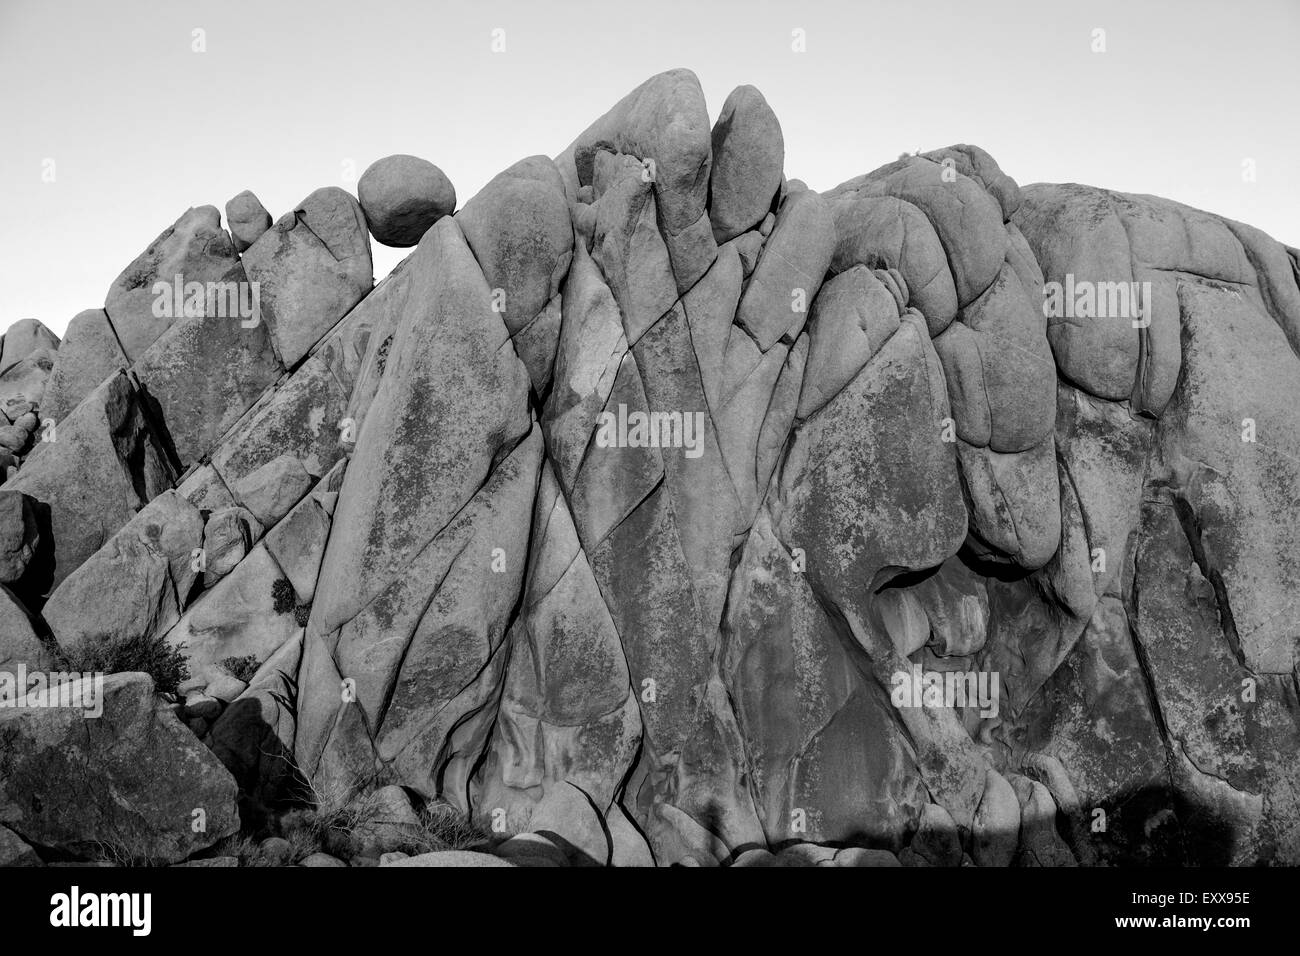 Last light on Jumbo Rocks at Joshua Tree National Park in California's Mojave desert. Stock Photo